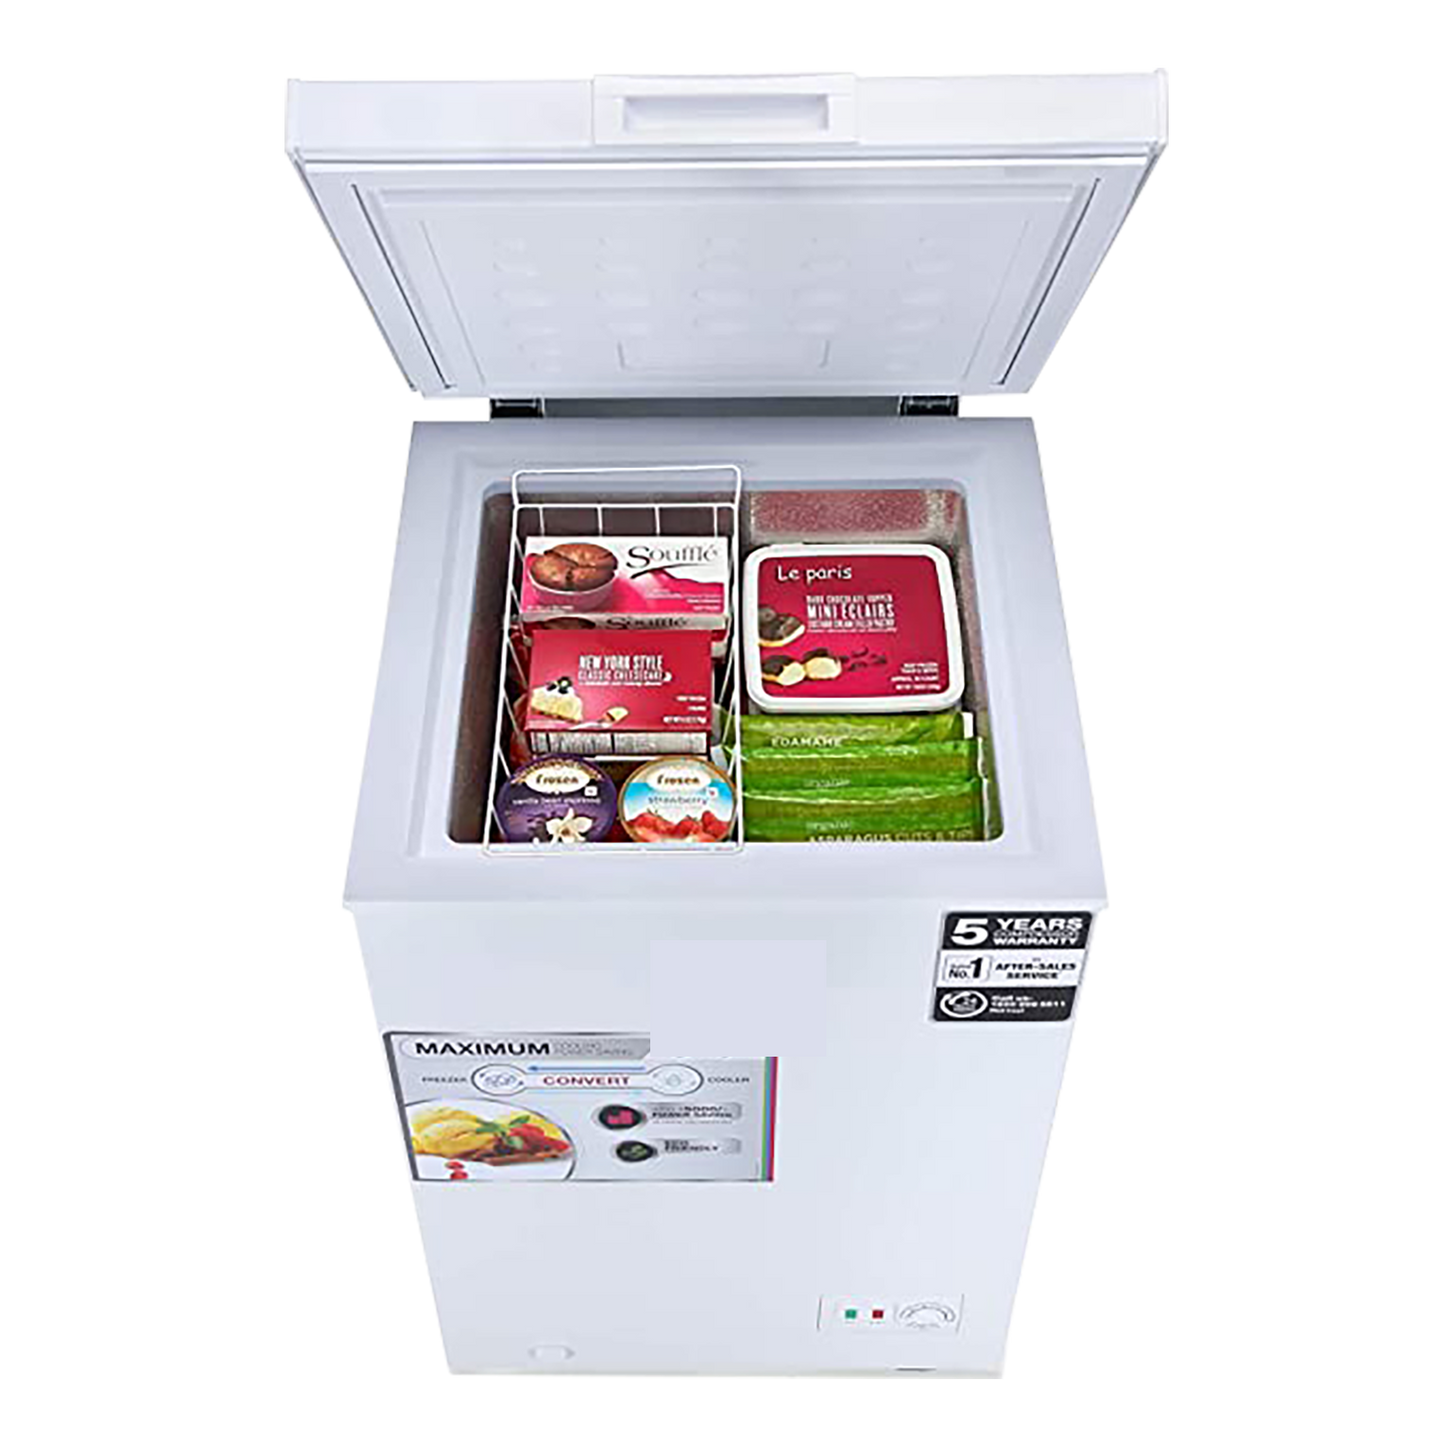 Emtex Slim Series 100 Litres Single Door Deep Freezer (Convertible Technology, DH GCHW 110 R6SHC RW, Royal White)